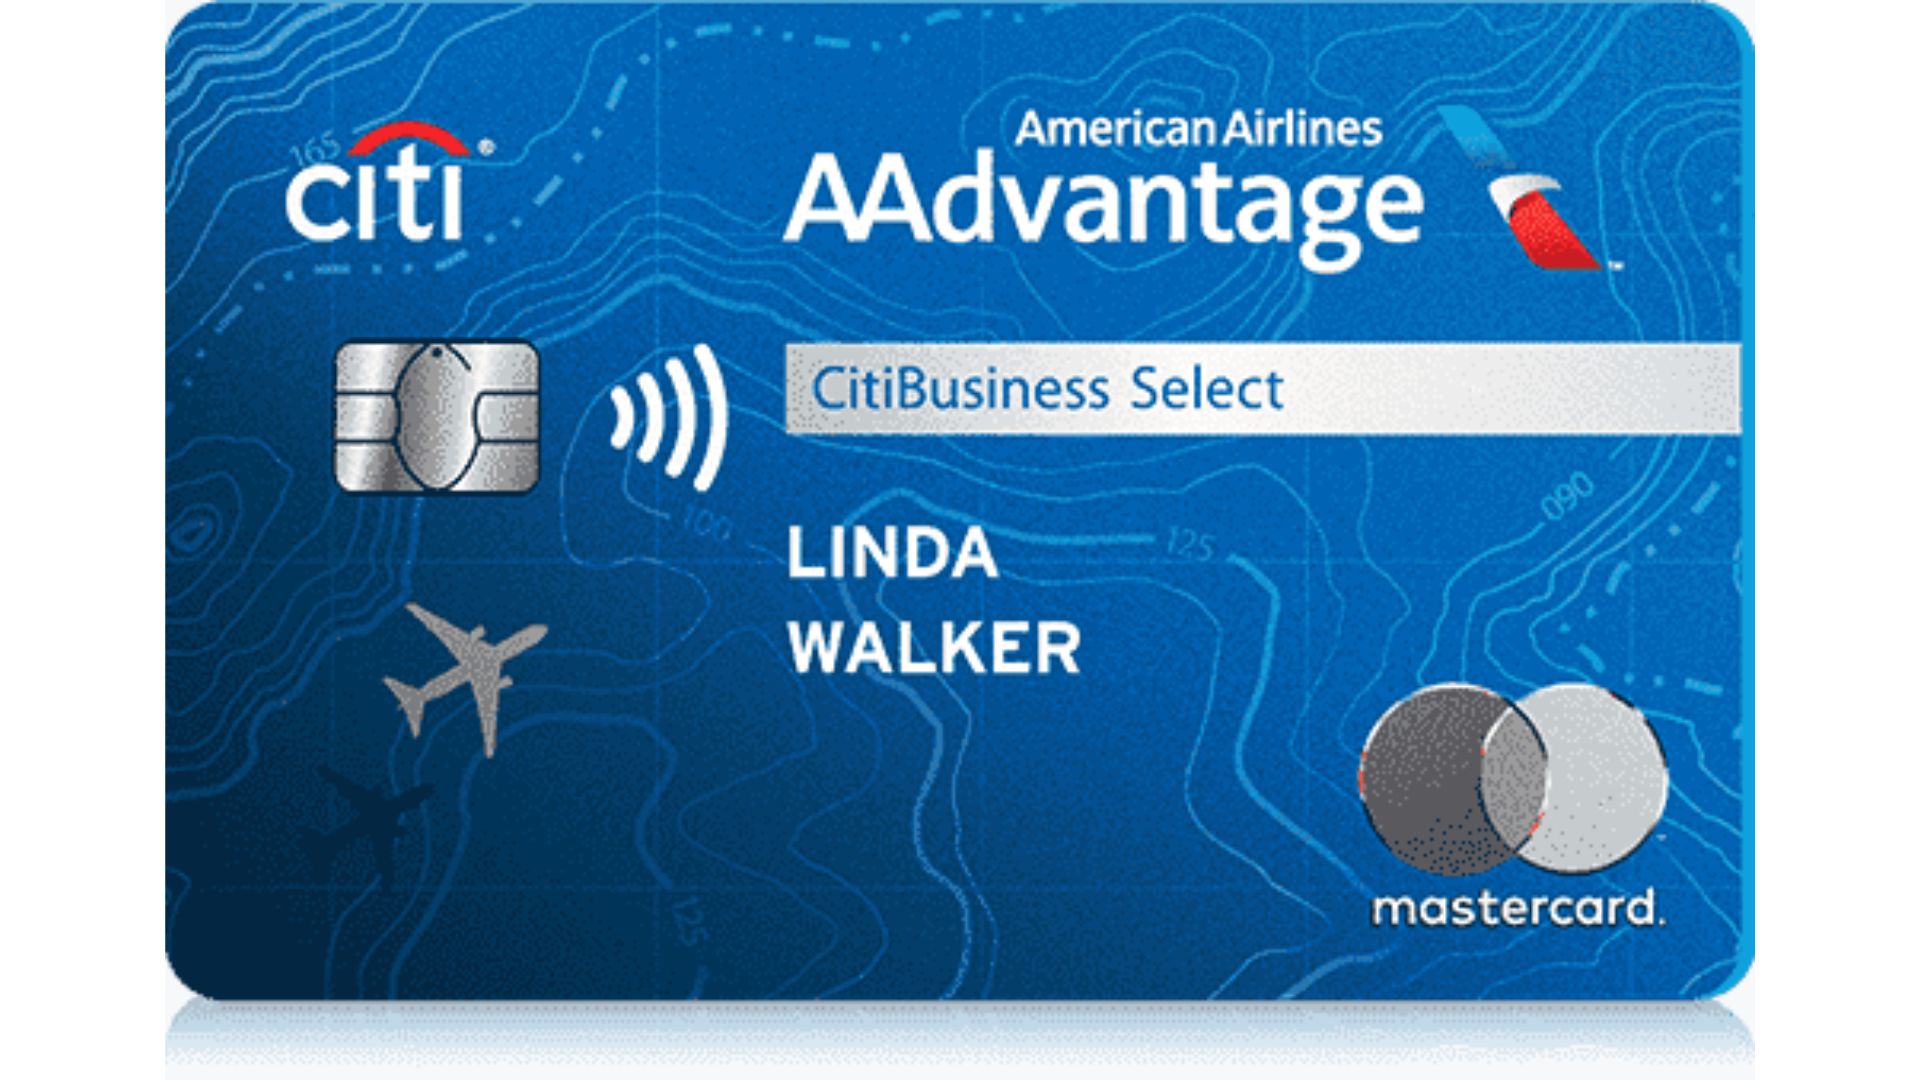 American Airlines AAdvantage Platinum Select